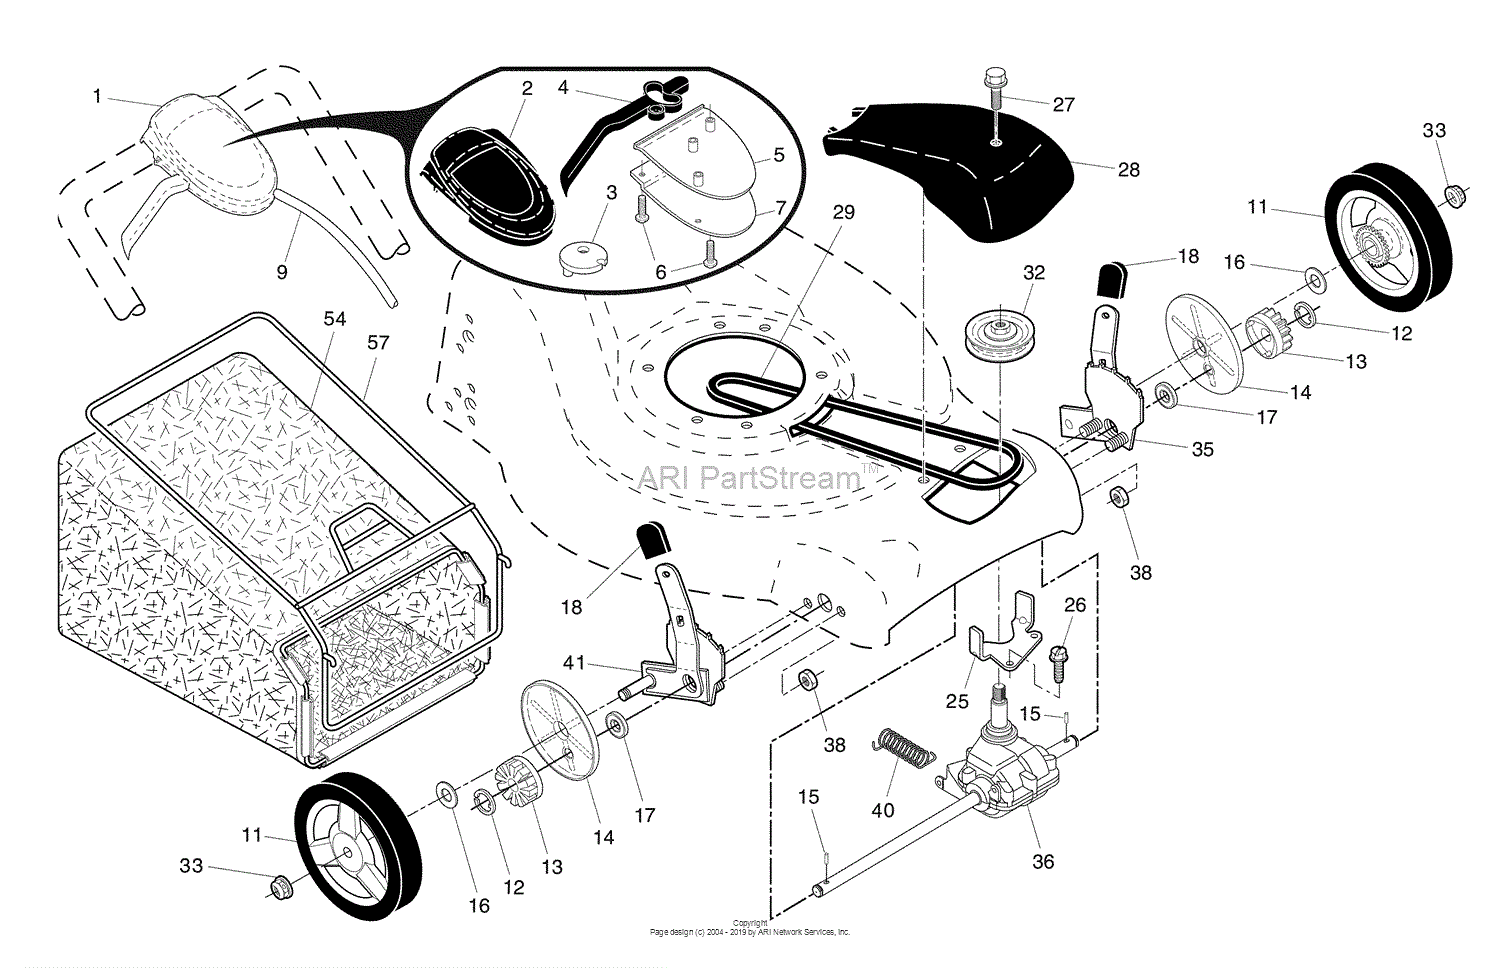 Husqvarna 7021 F 96143004200 2009 01 Parts Diagram For Repair Parts